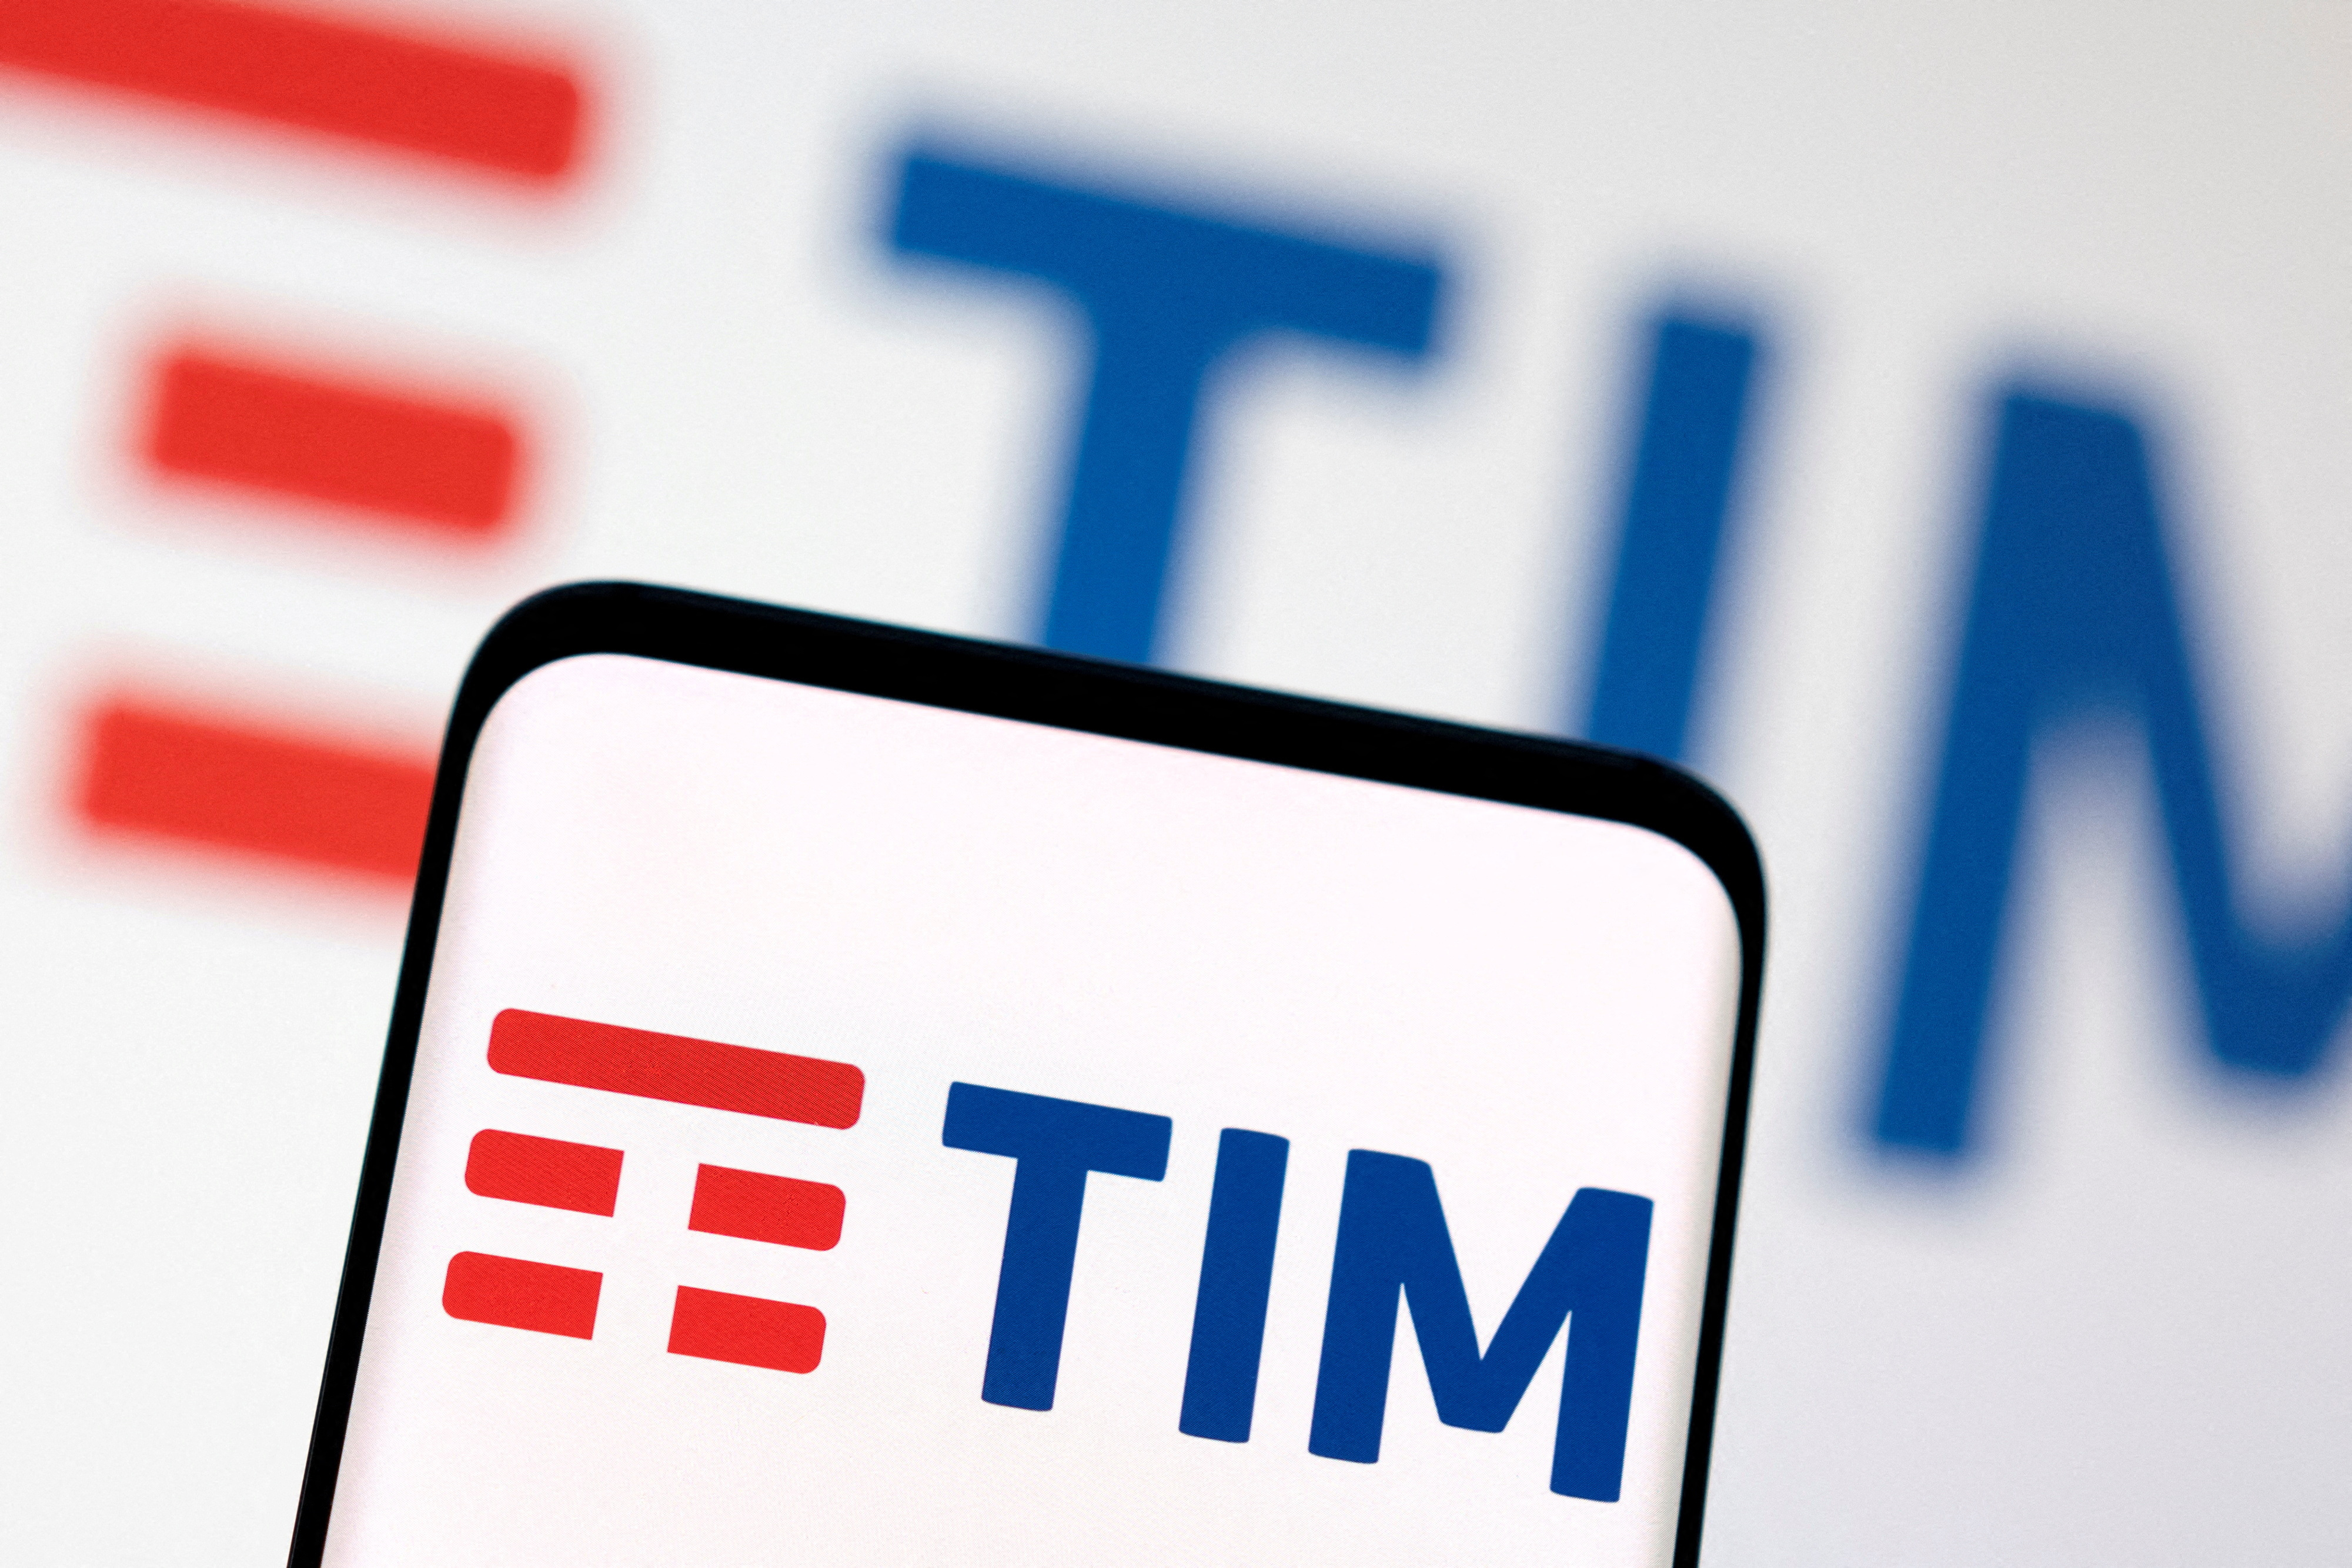 Le grand retour de l'Etat italien dans le capital de Telecom Itlaia